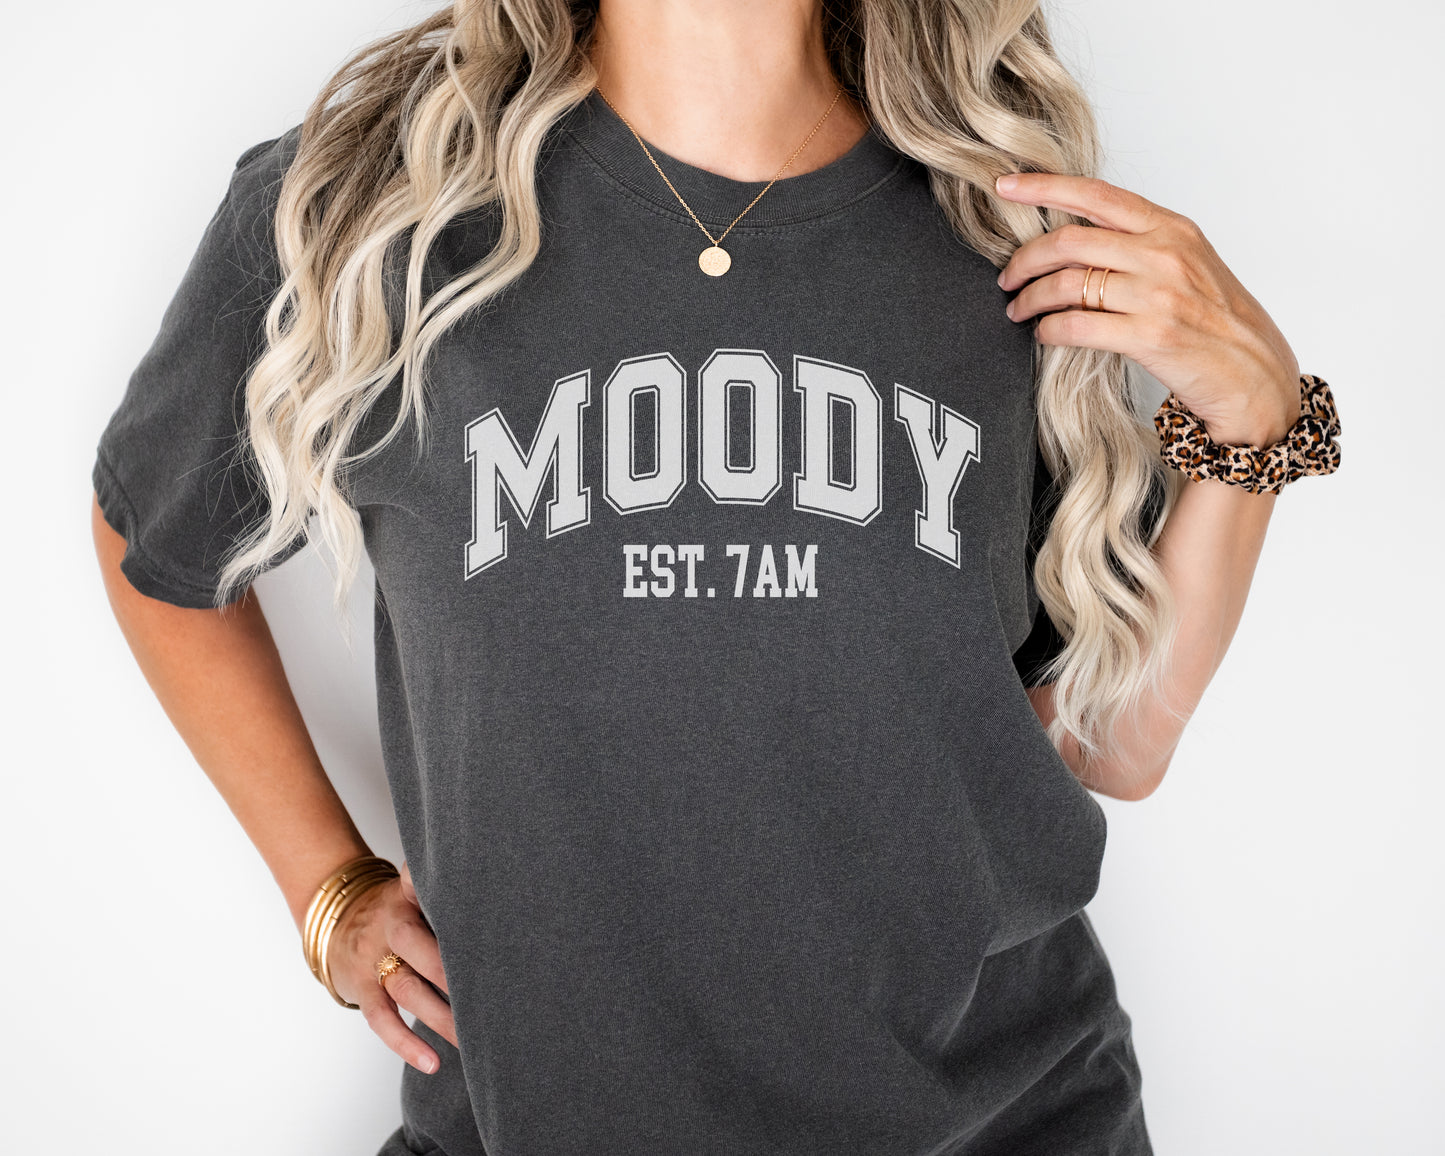 Moody Est 7am Shirt